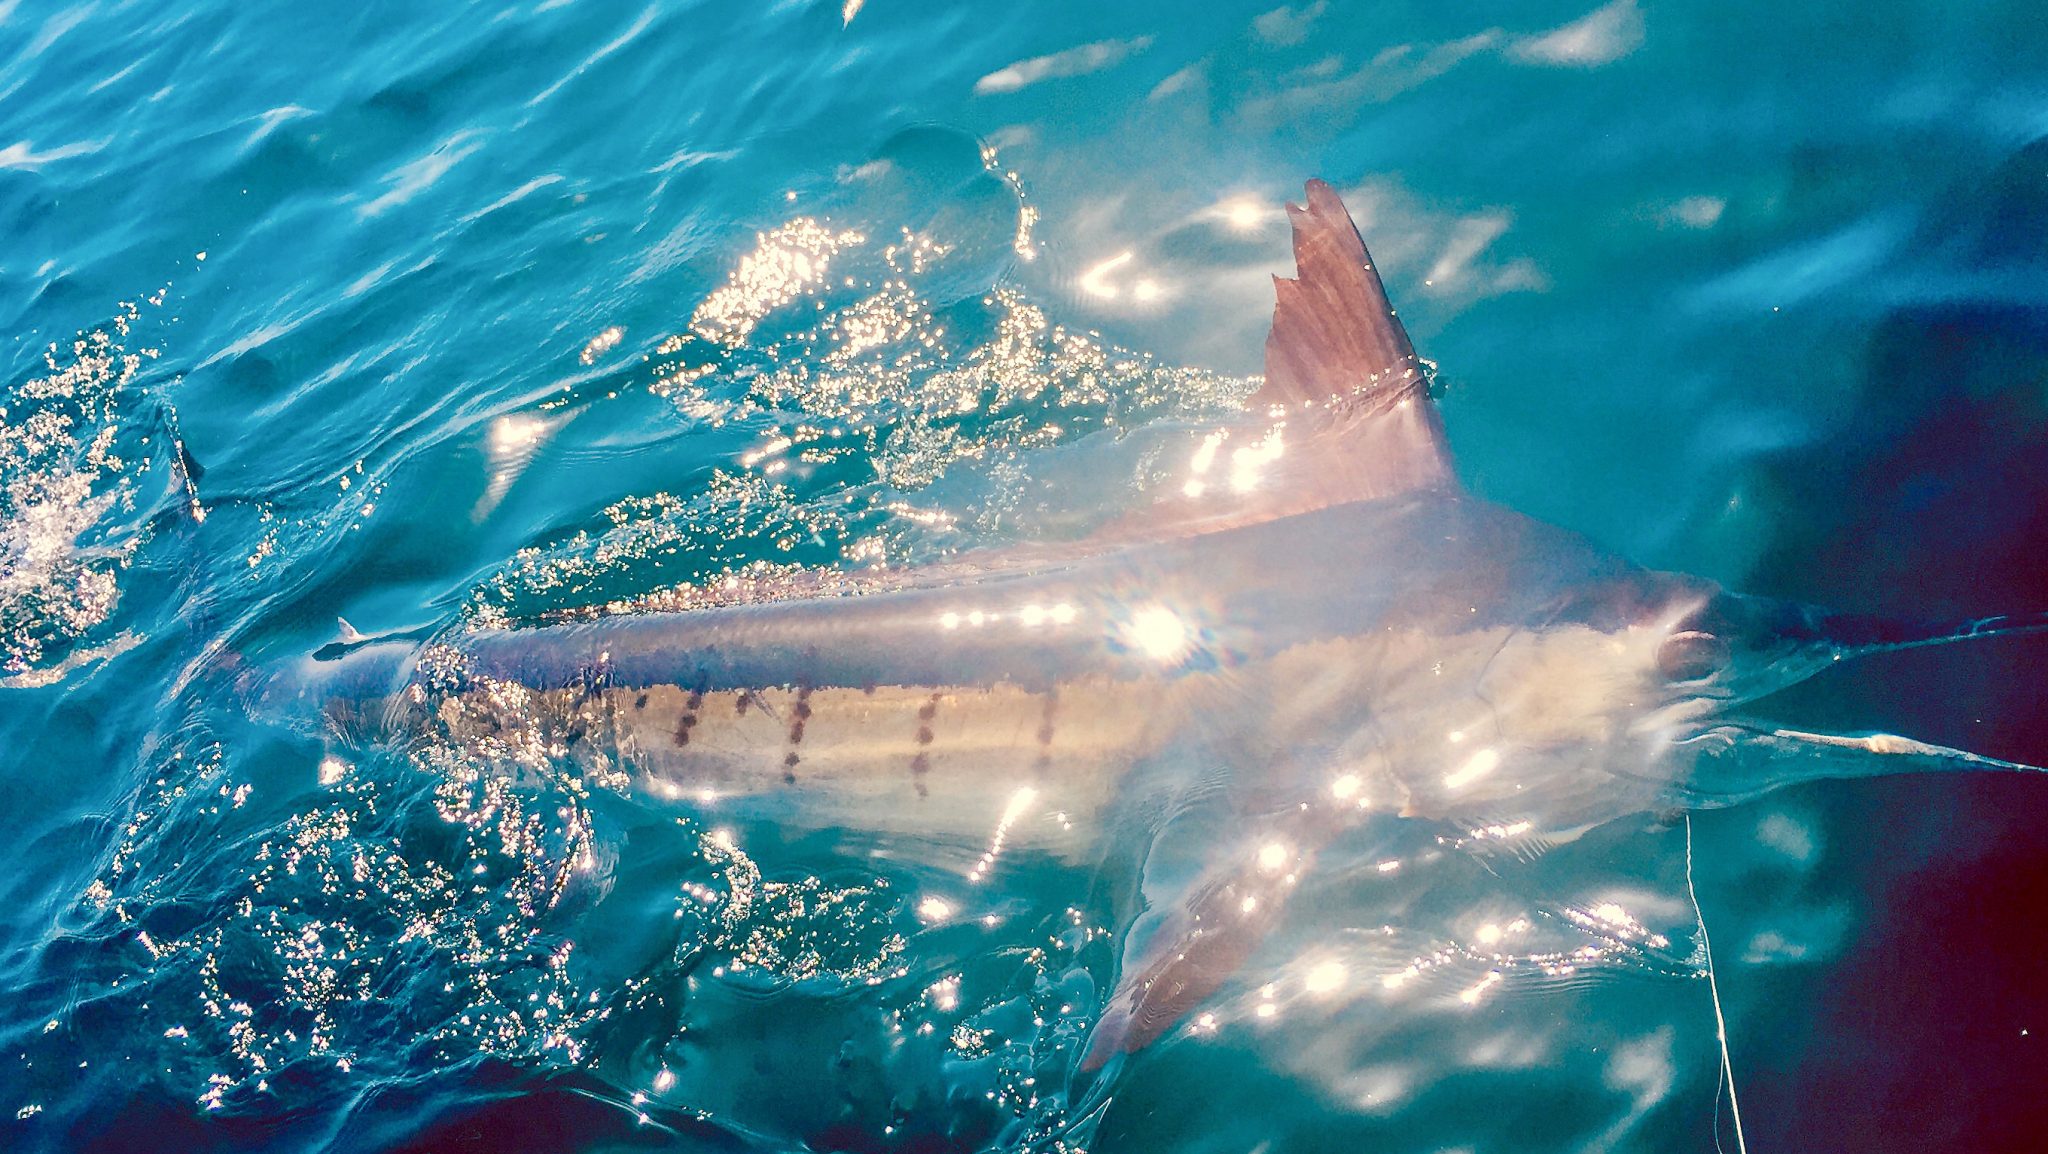 Wasabi Fishing - Striped Marlin